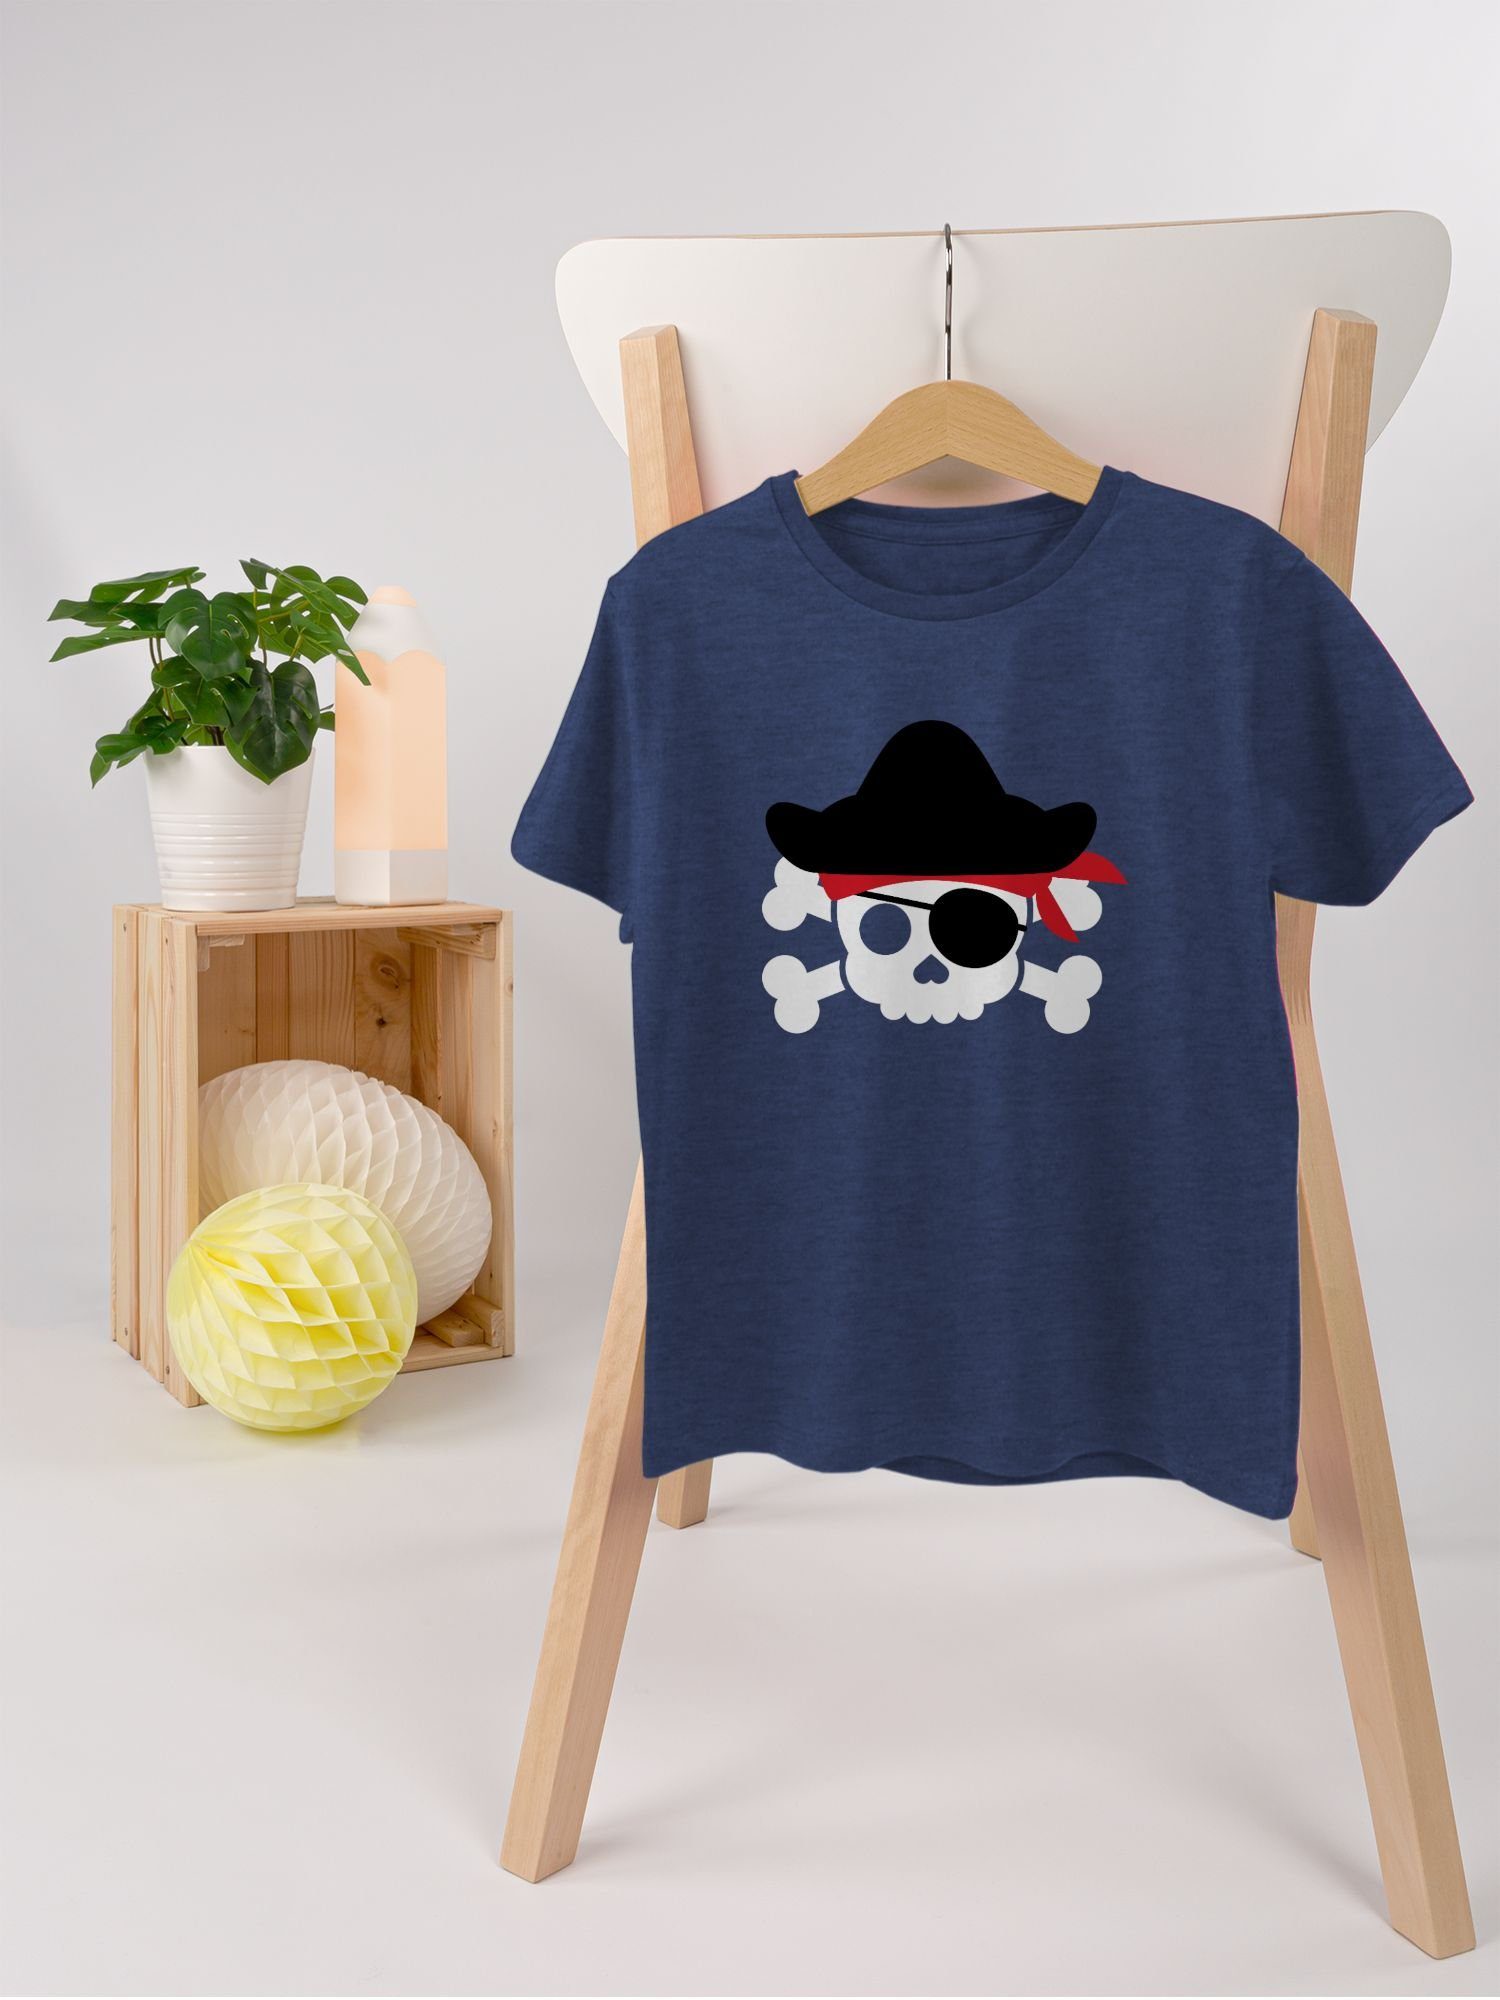 3 T-Shirt - Fasching Piraten Piratenkostüm Geburtstags Karneval Totenkopf Pirat Shirtracer Dunkelblau Meliert Piratenkopf & Kostüm